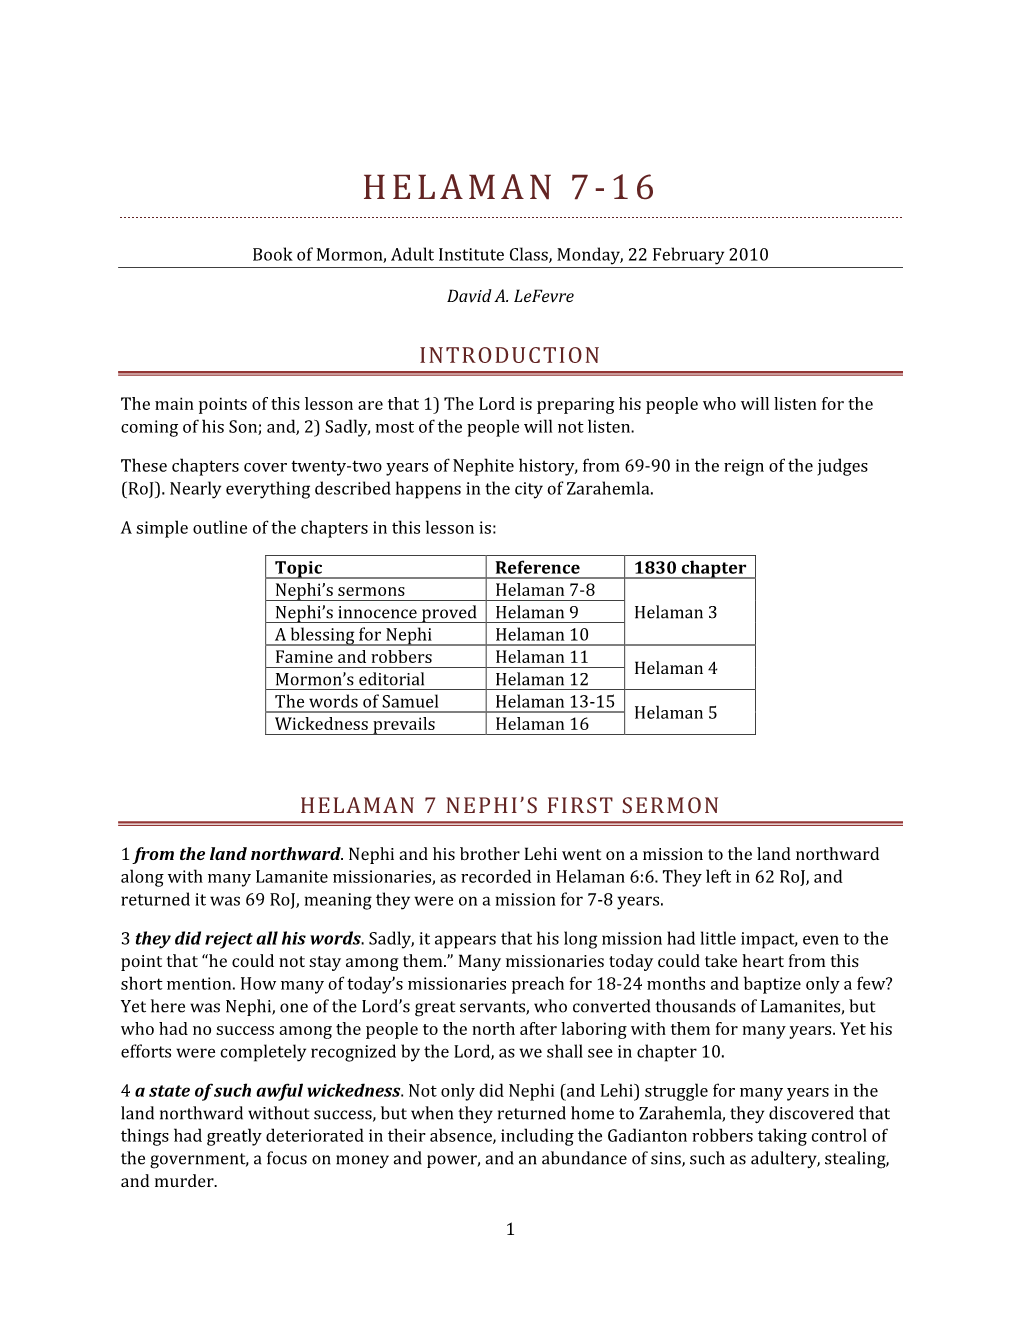 Helaman 7-16